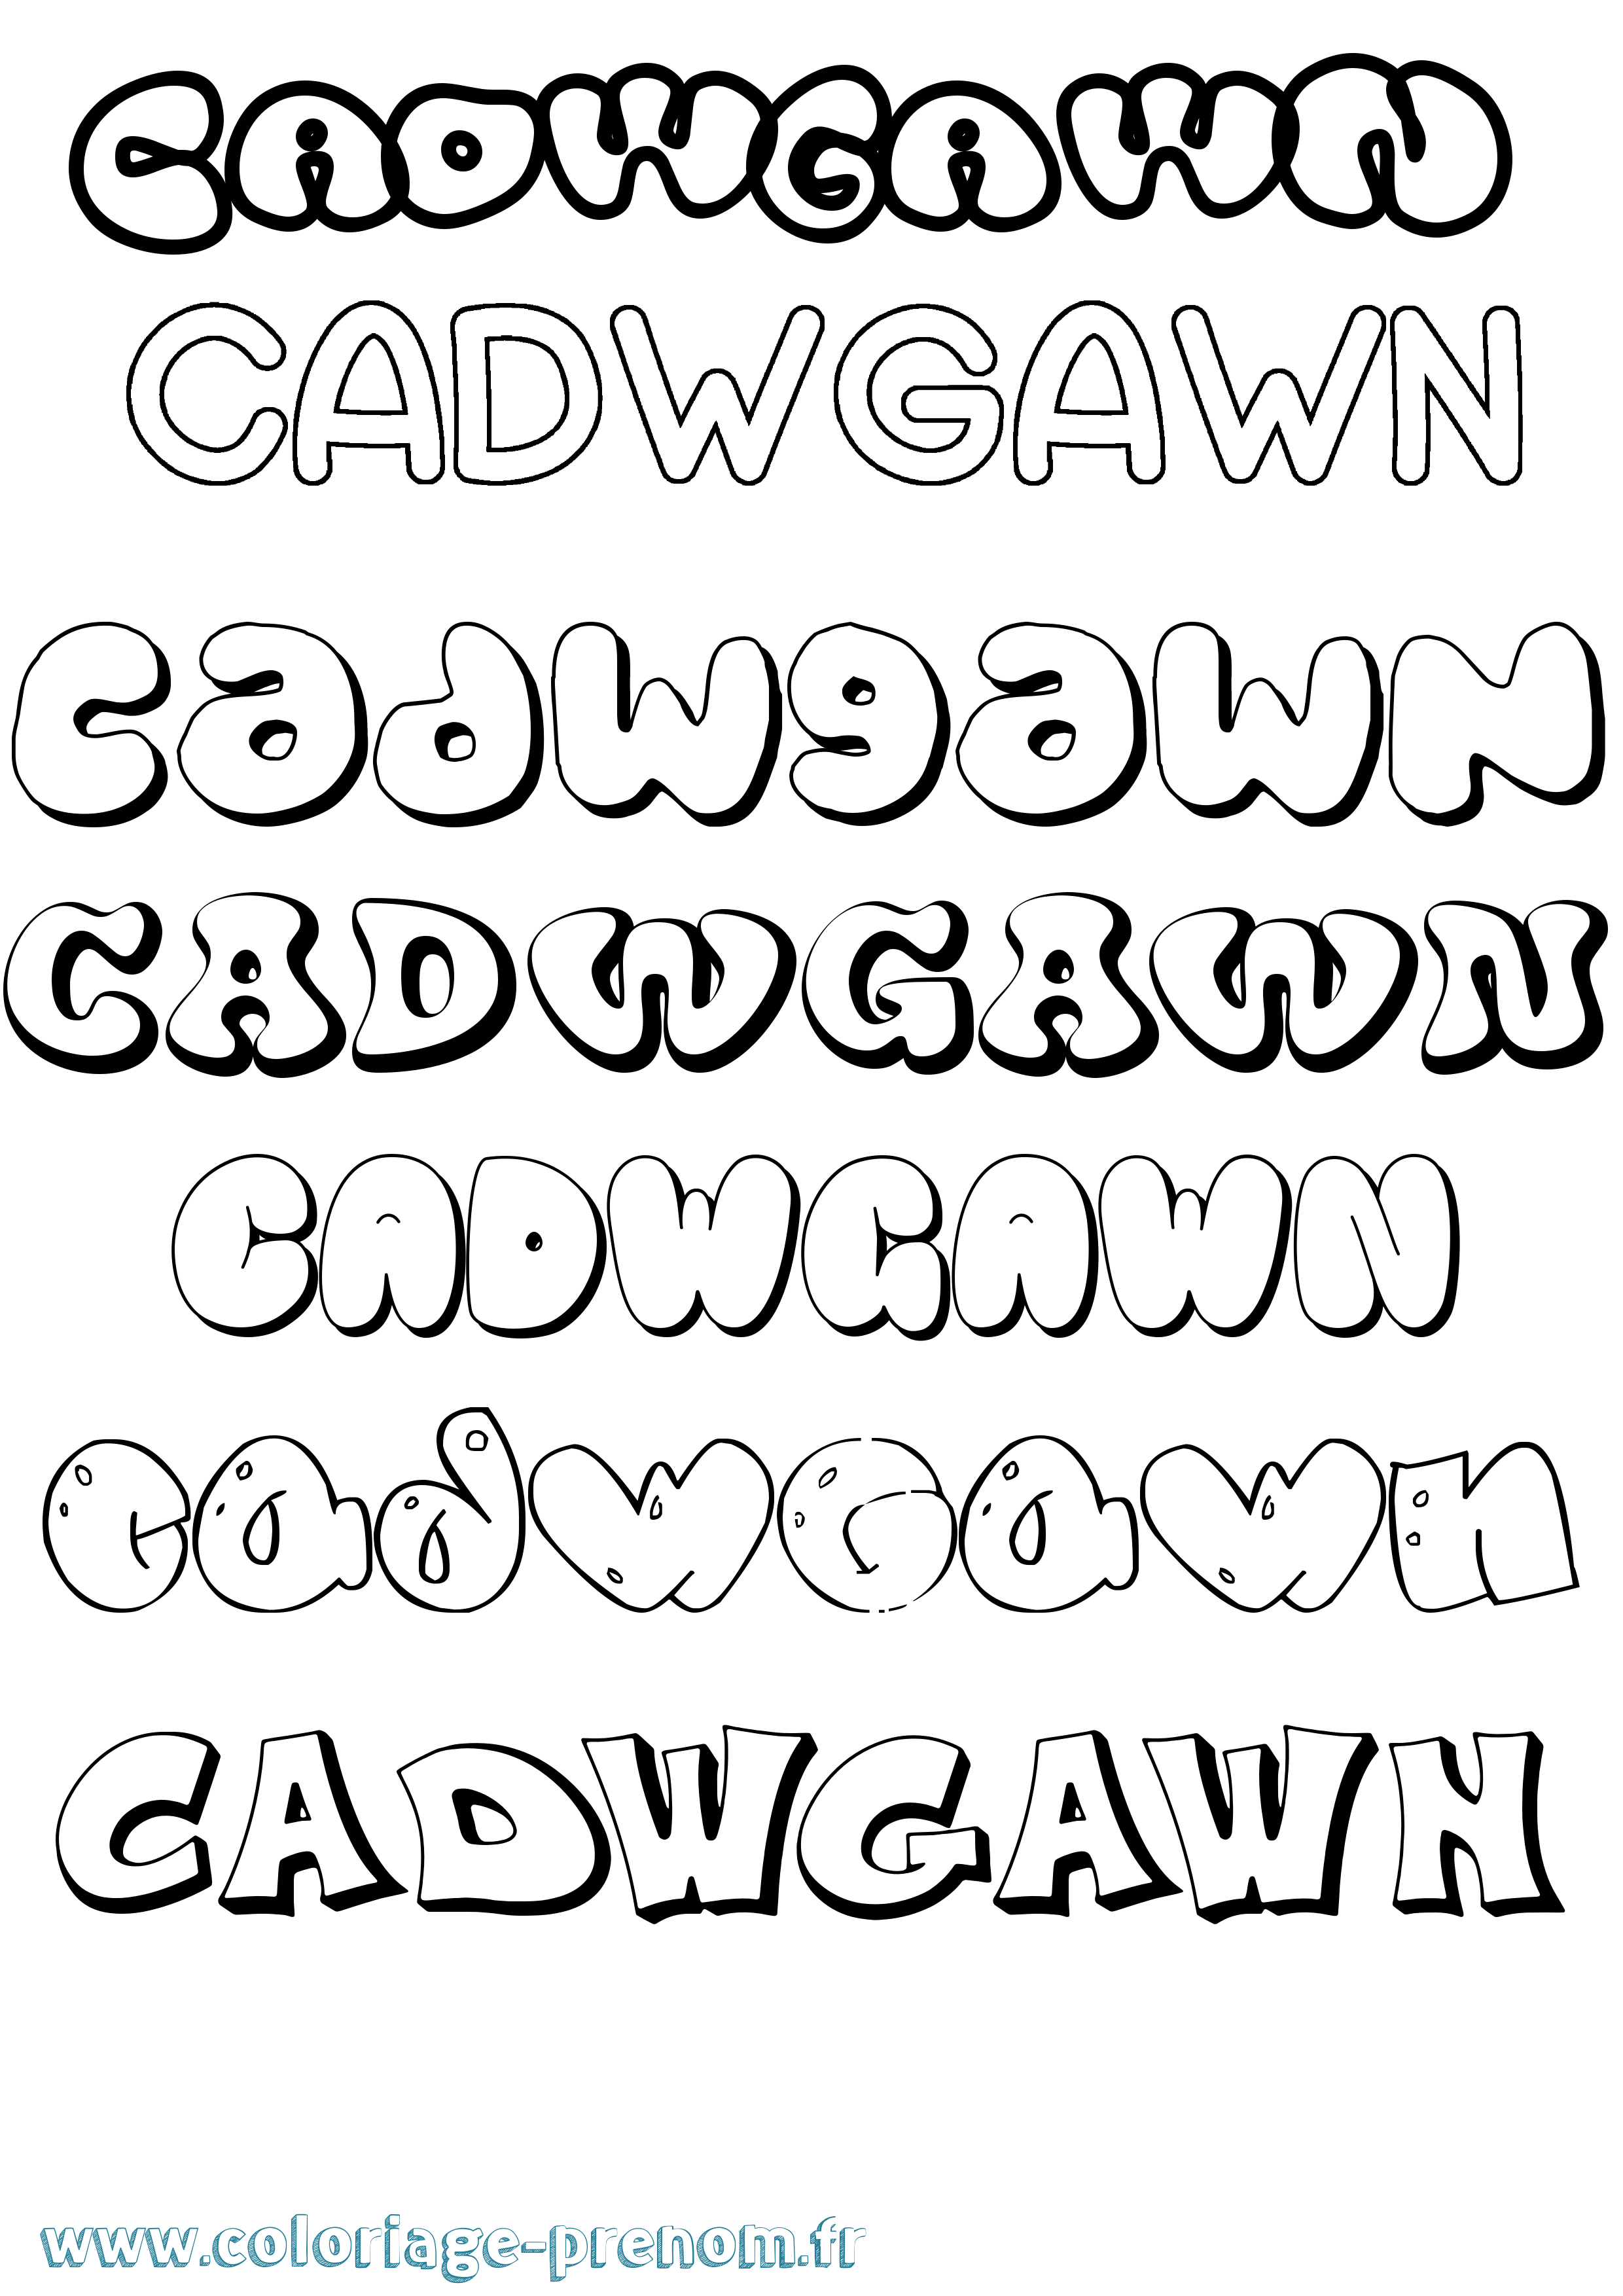 Coloriage prénom Cadwgawn Bubble